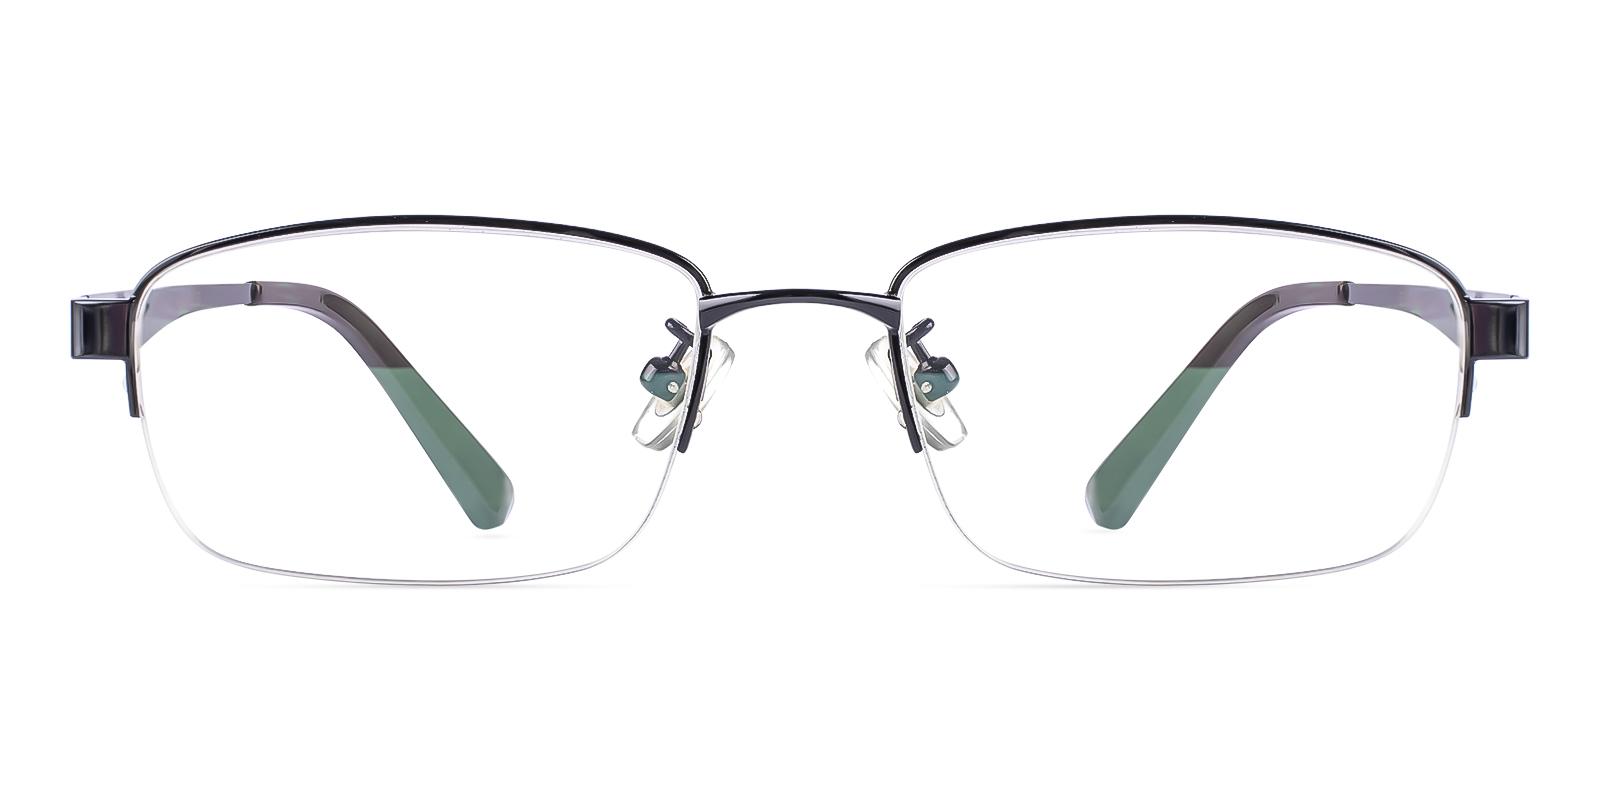 Rateitor Black Titanium Eyeglasses , NosePads Frames from ABBE Glasses